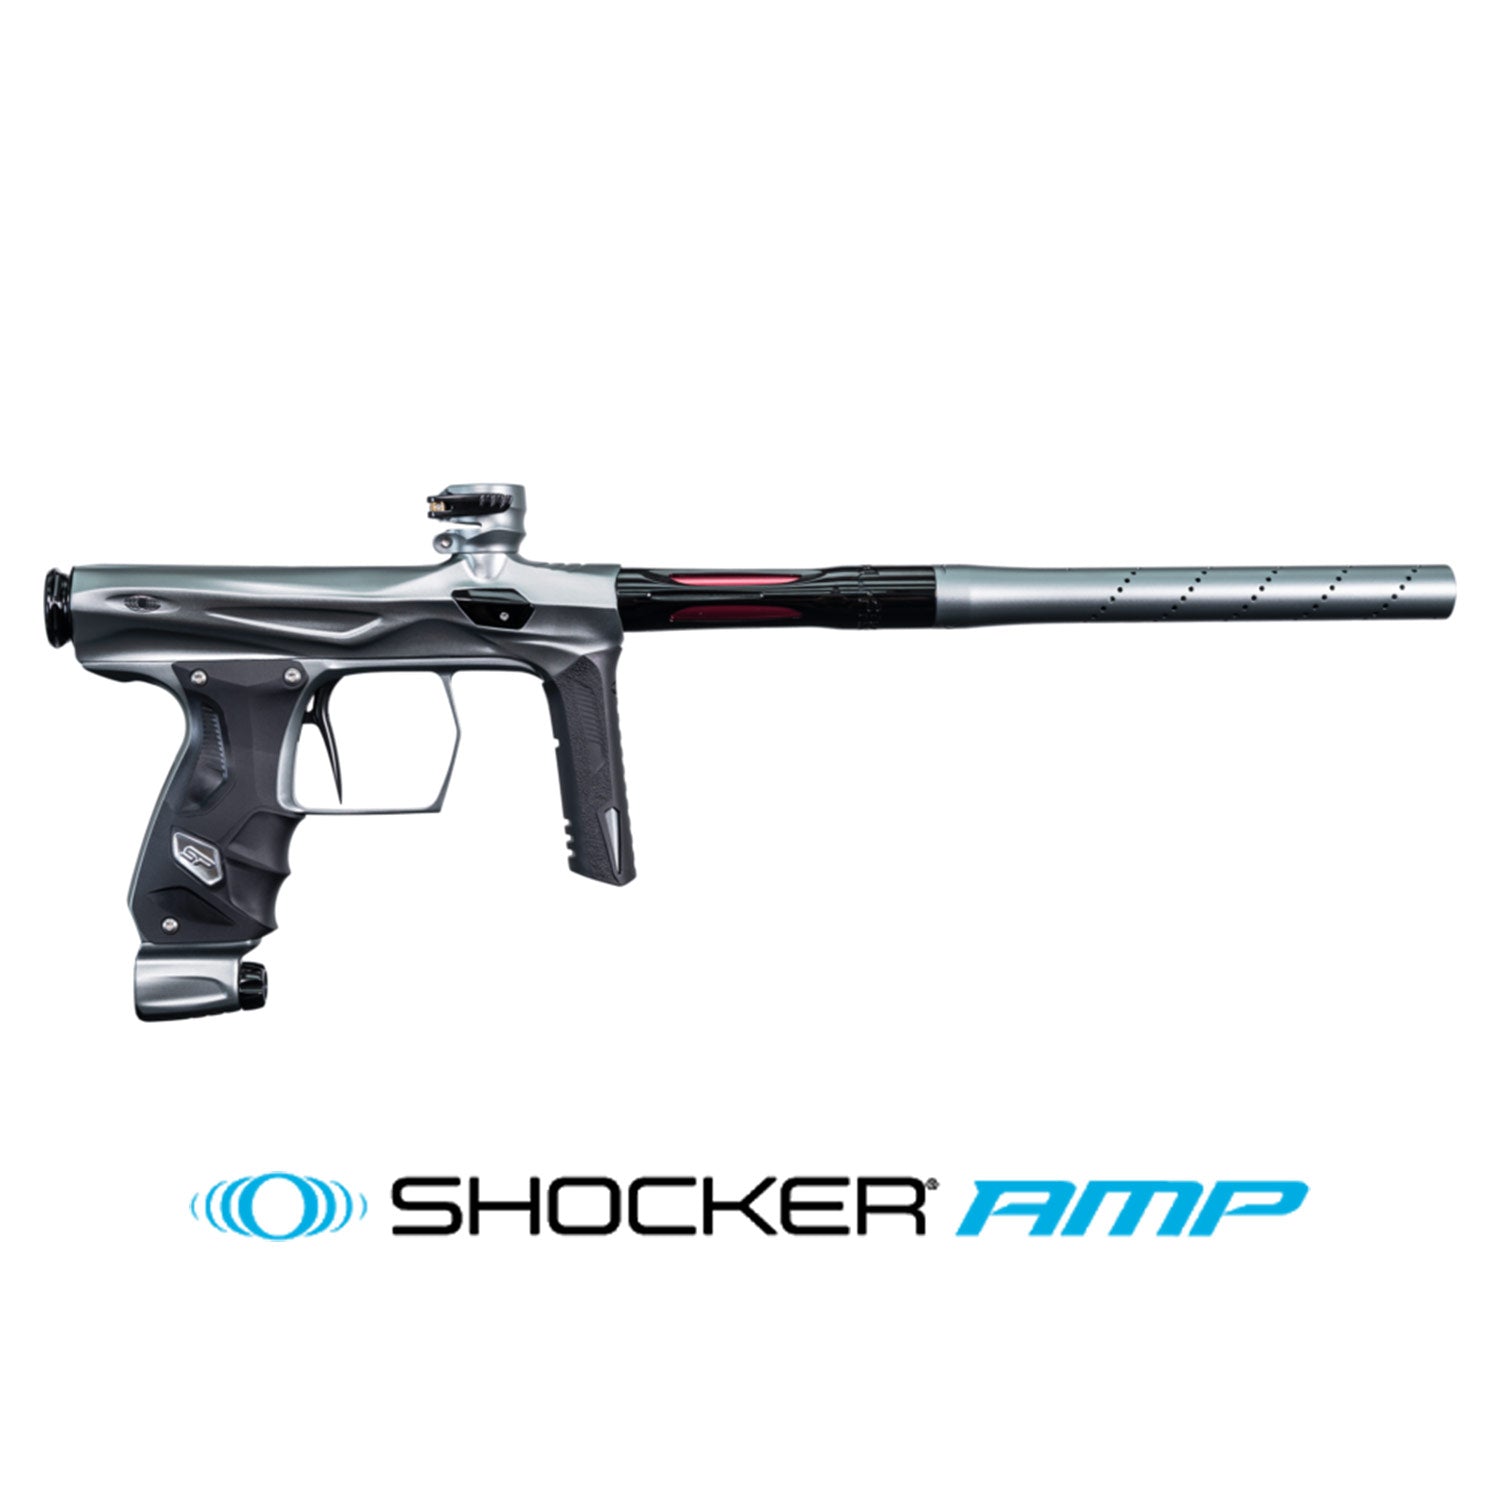 SP Shocker AMP - Pewter